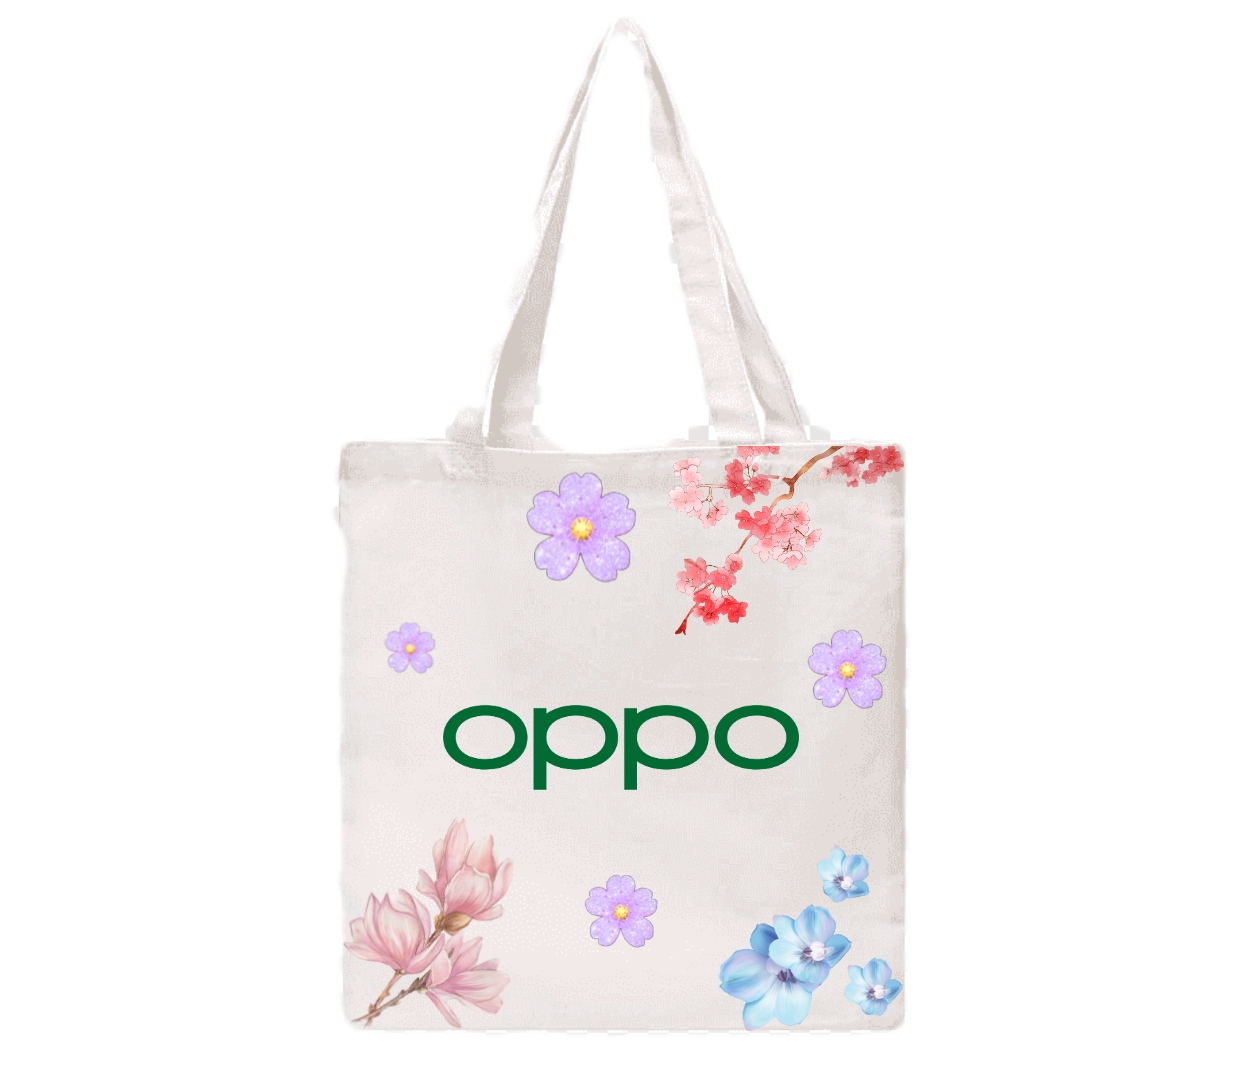 Oppo Brand Tri Color Purse Orange And Beige Bag Satchel | eBay